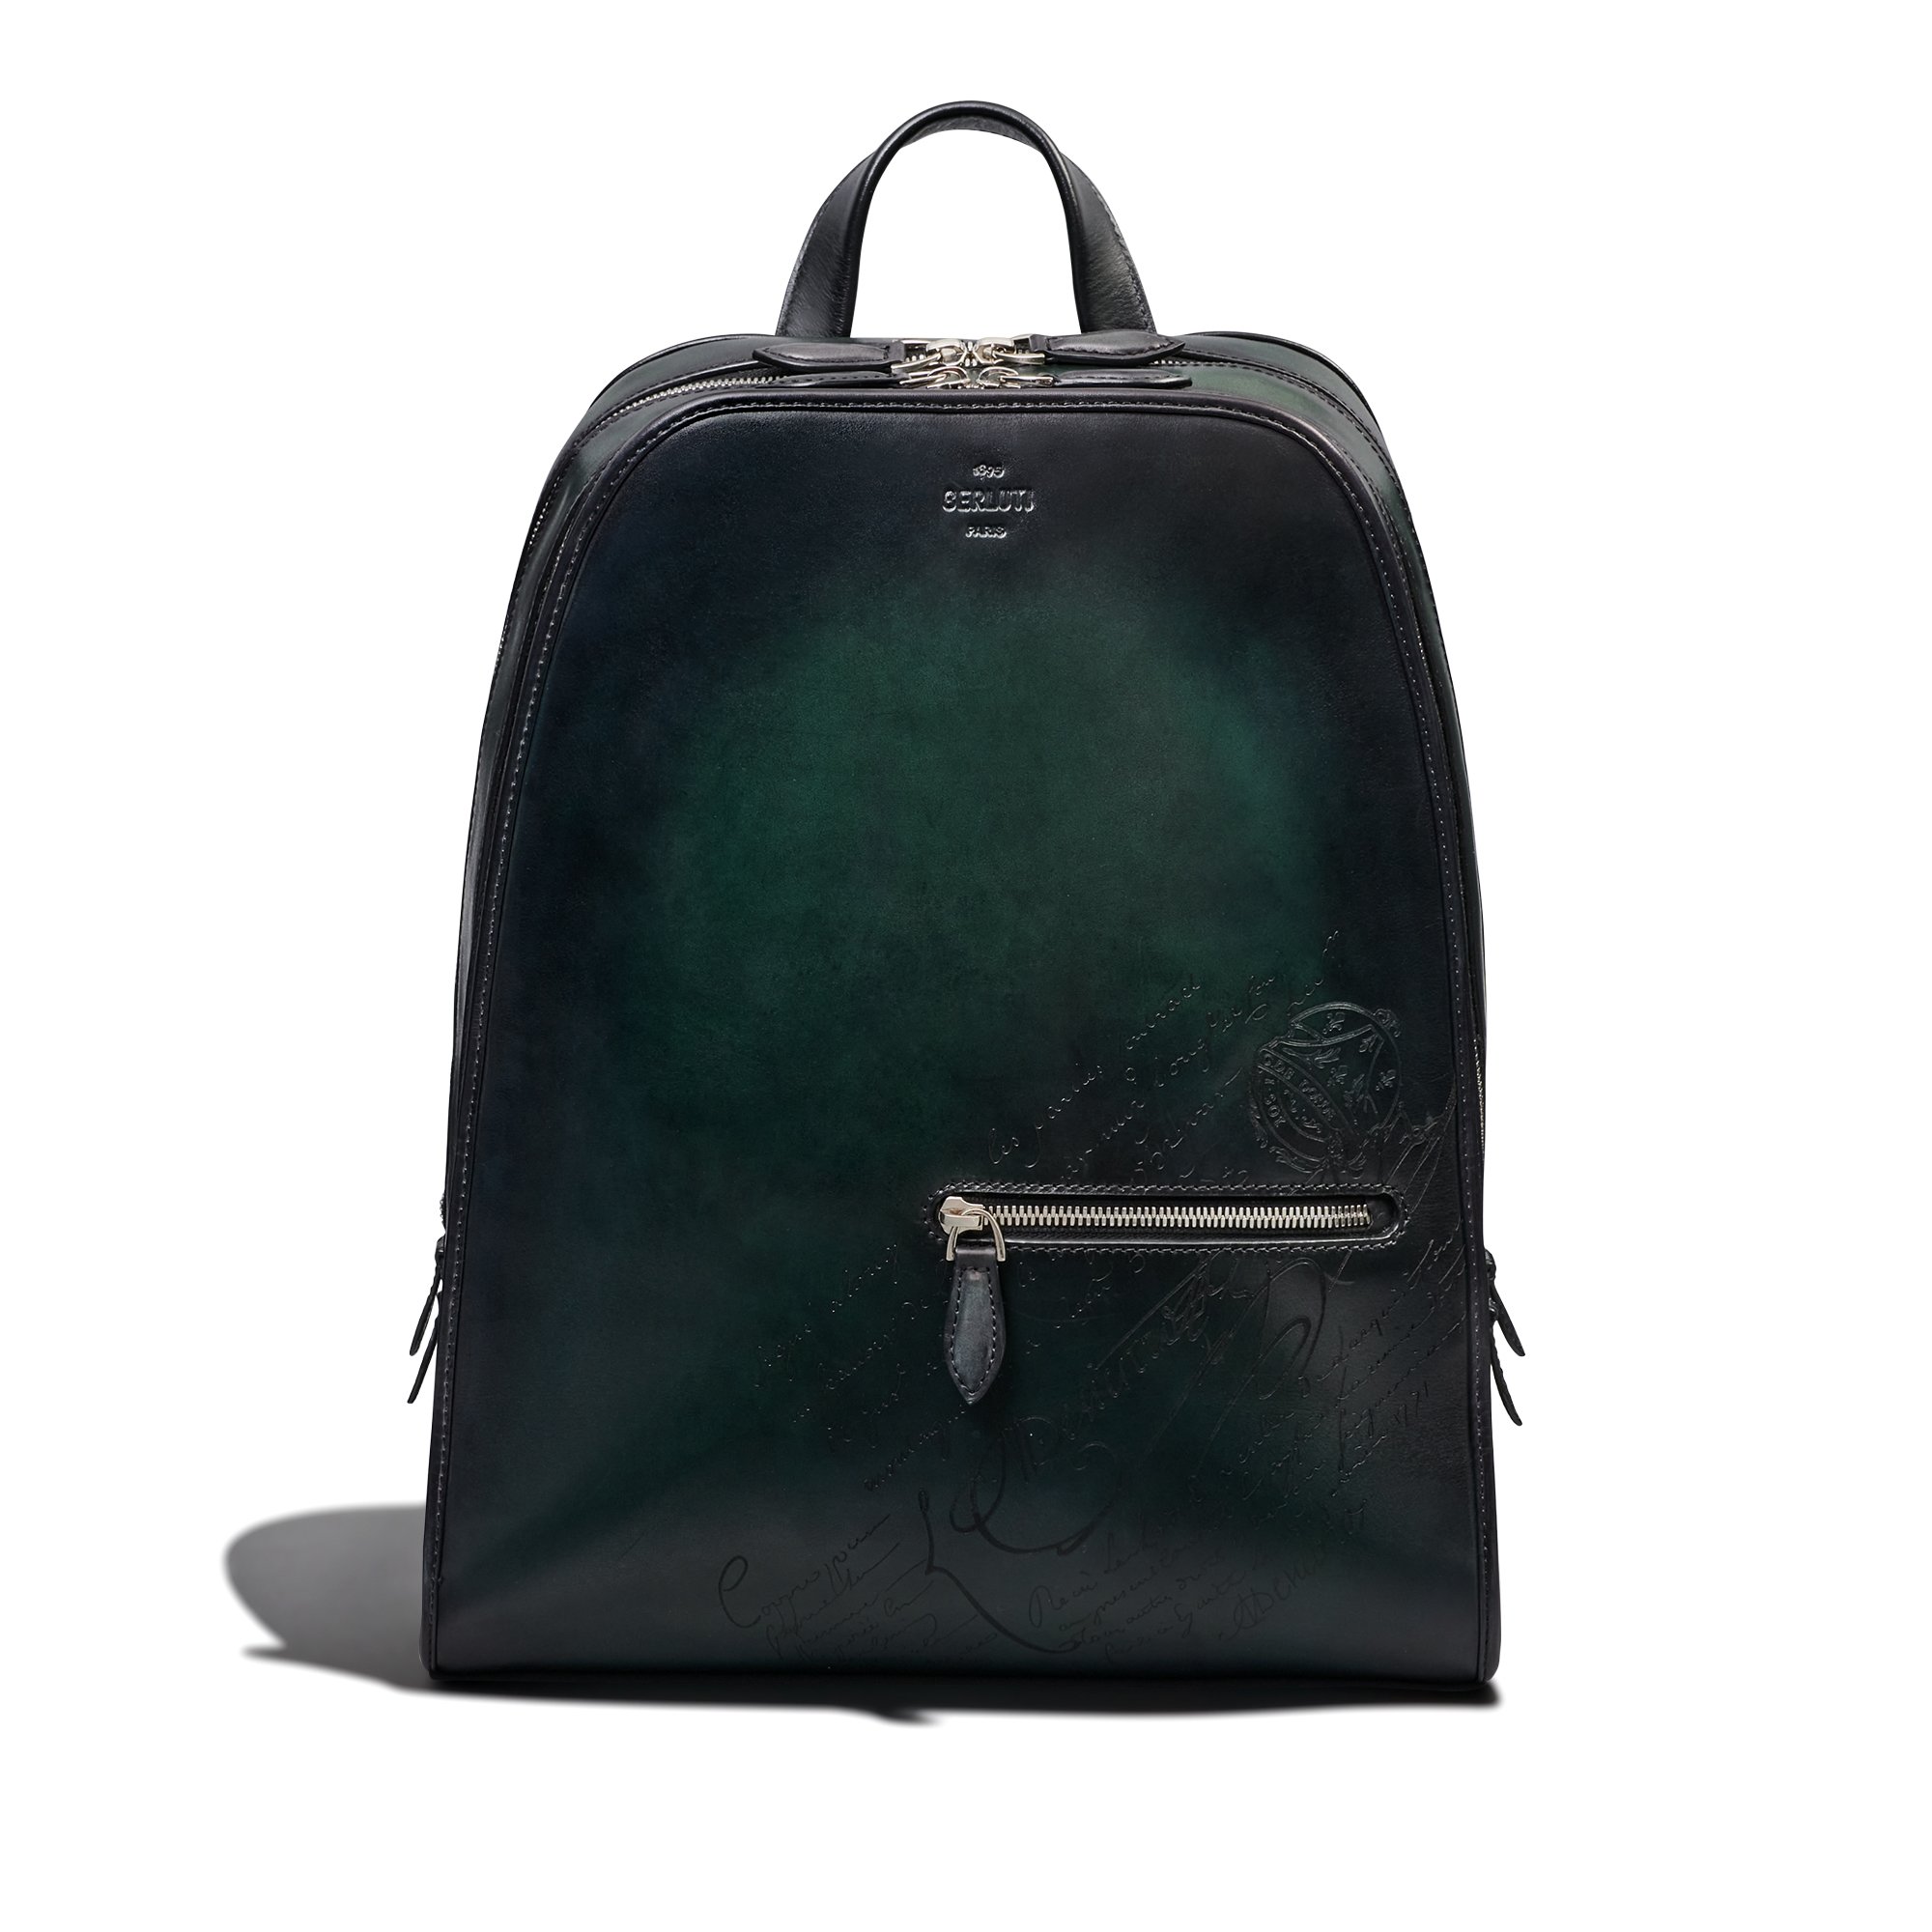 Subtle branding - Berluti backpack - £3,100